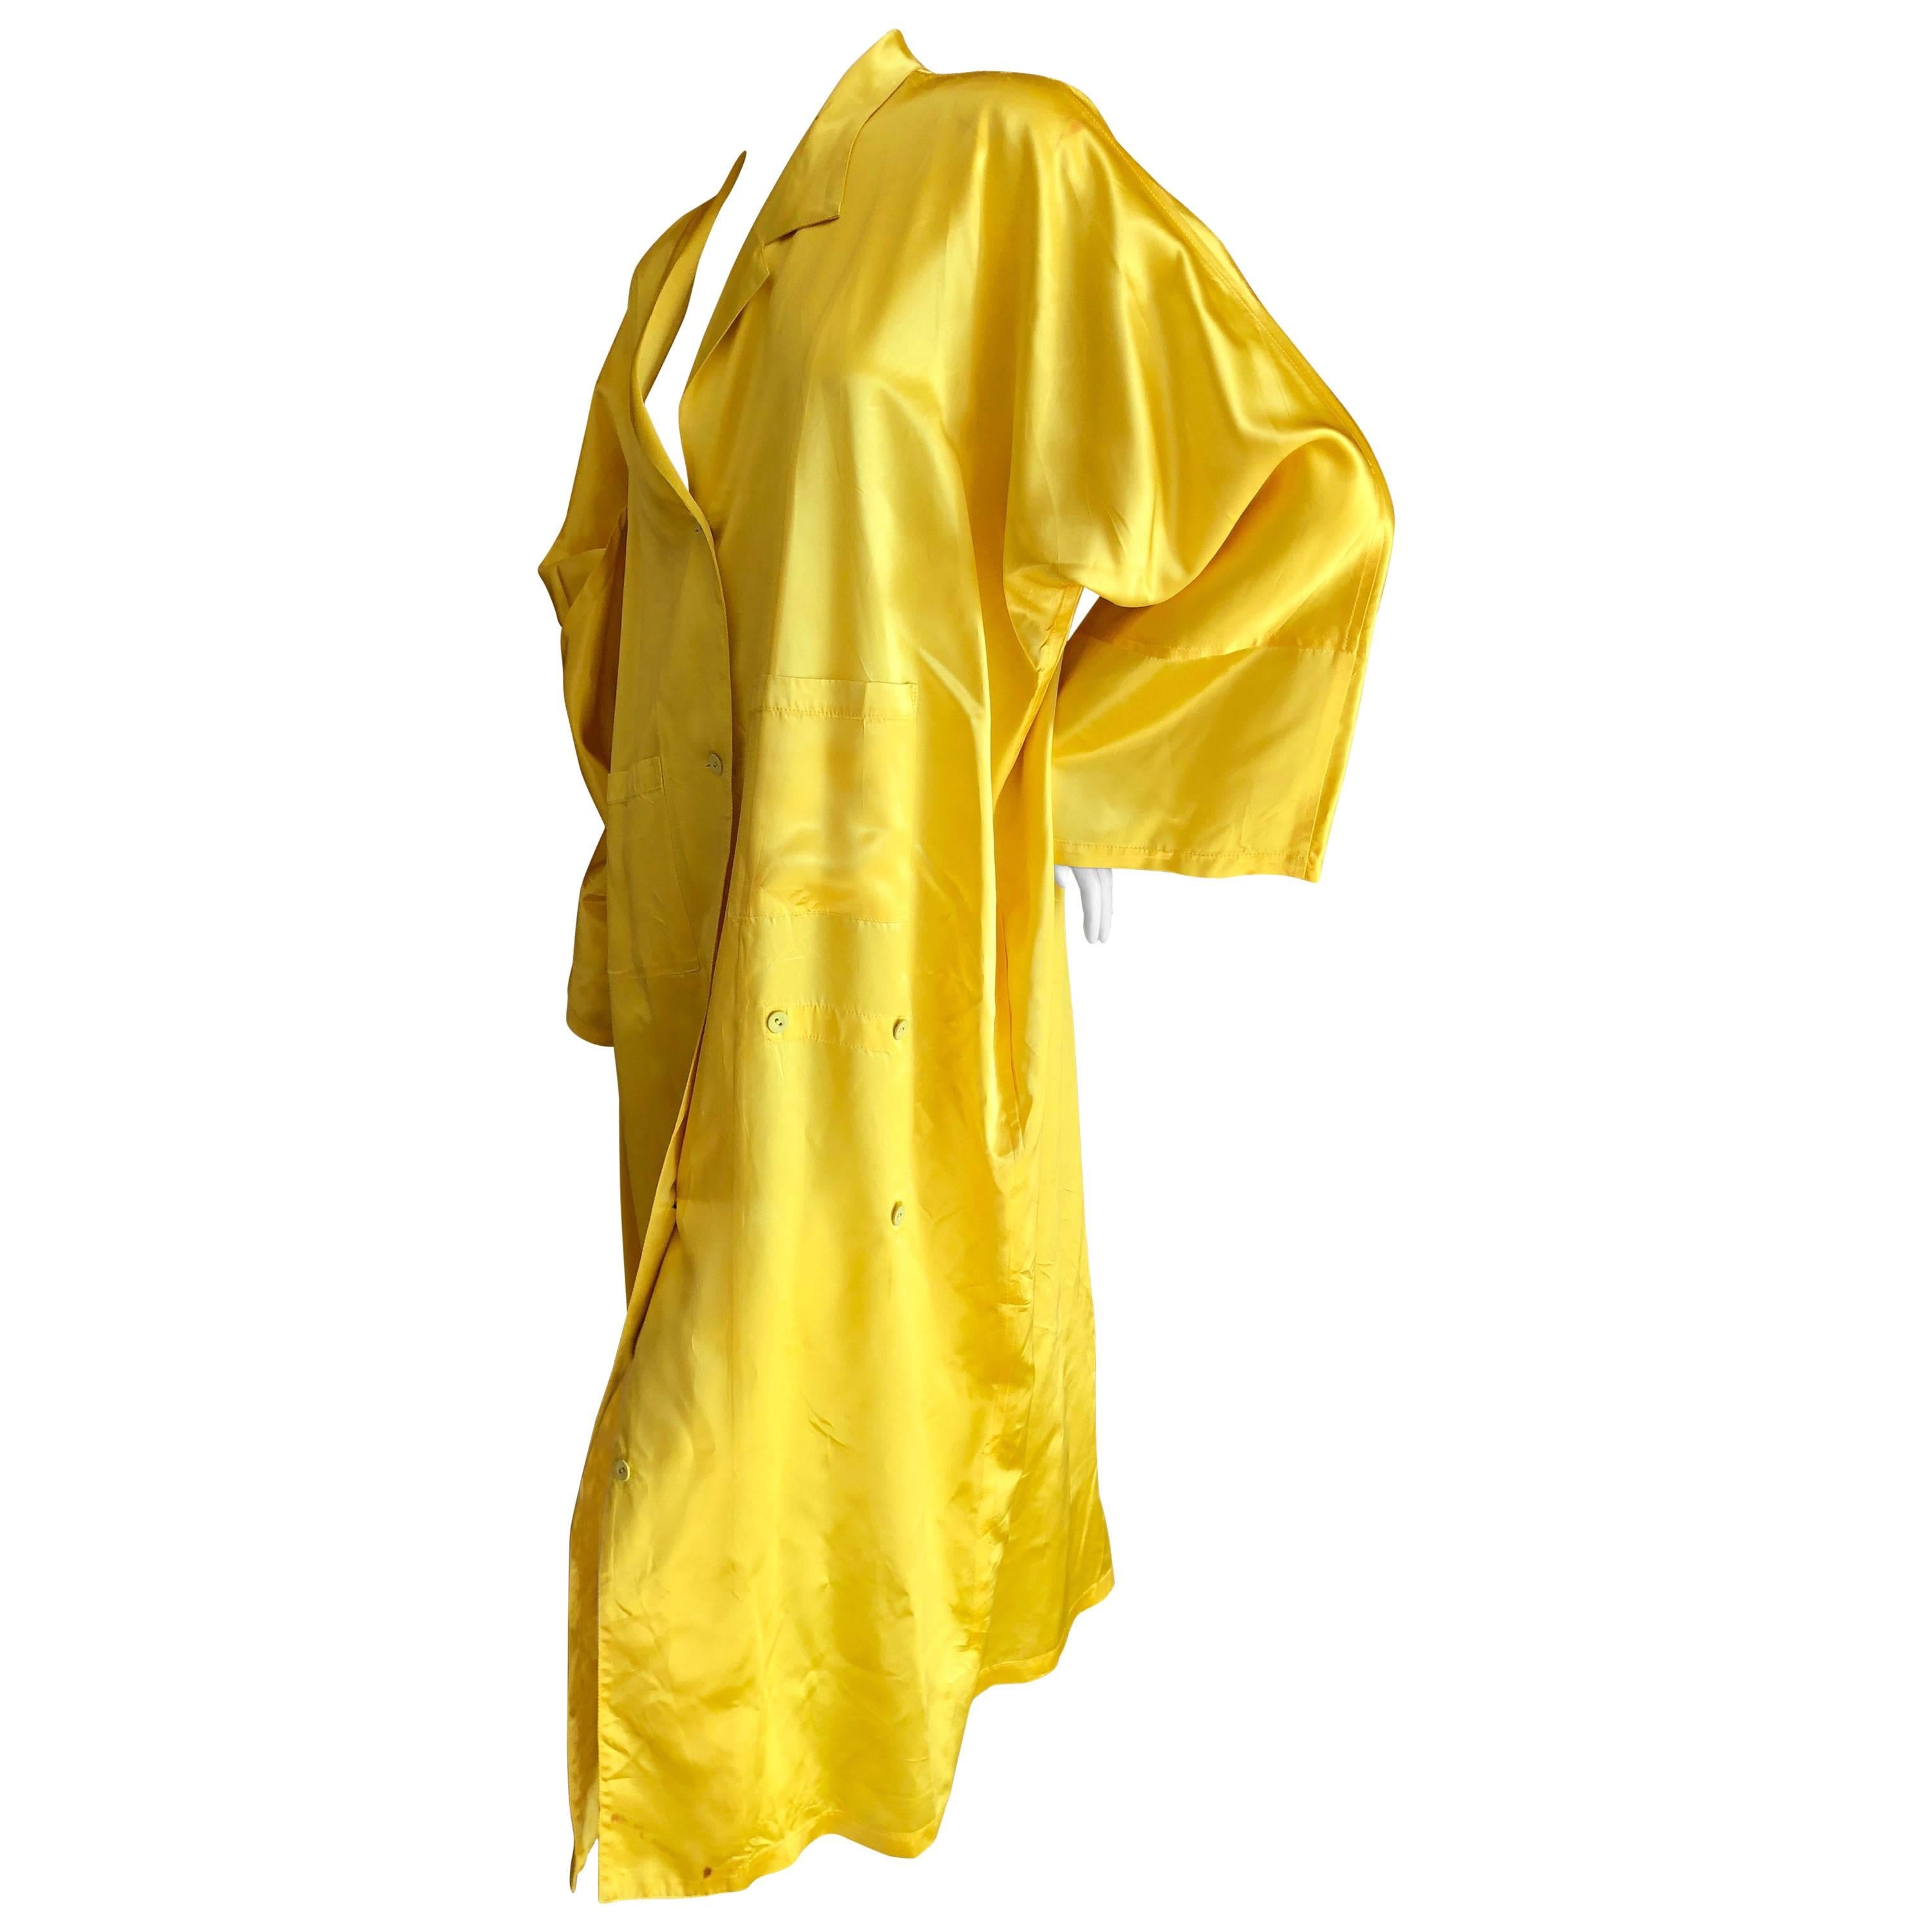 Yohji Yamamoto 1980's Neon Yellow Oversize Coat